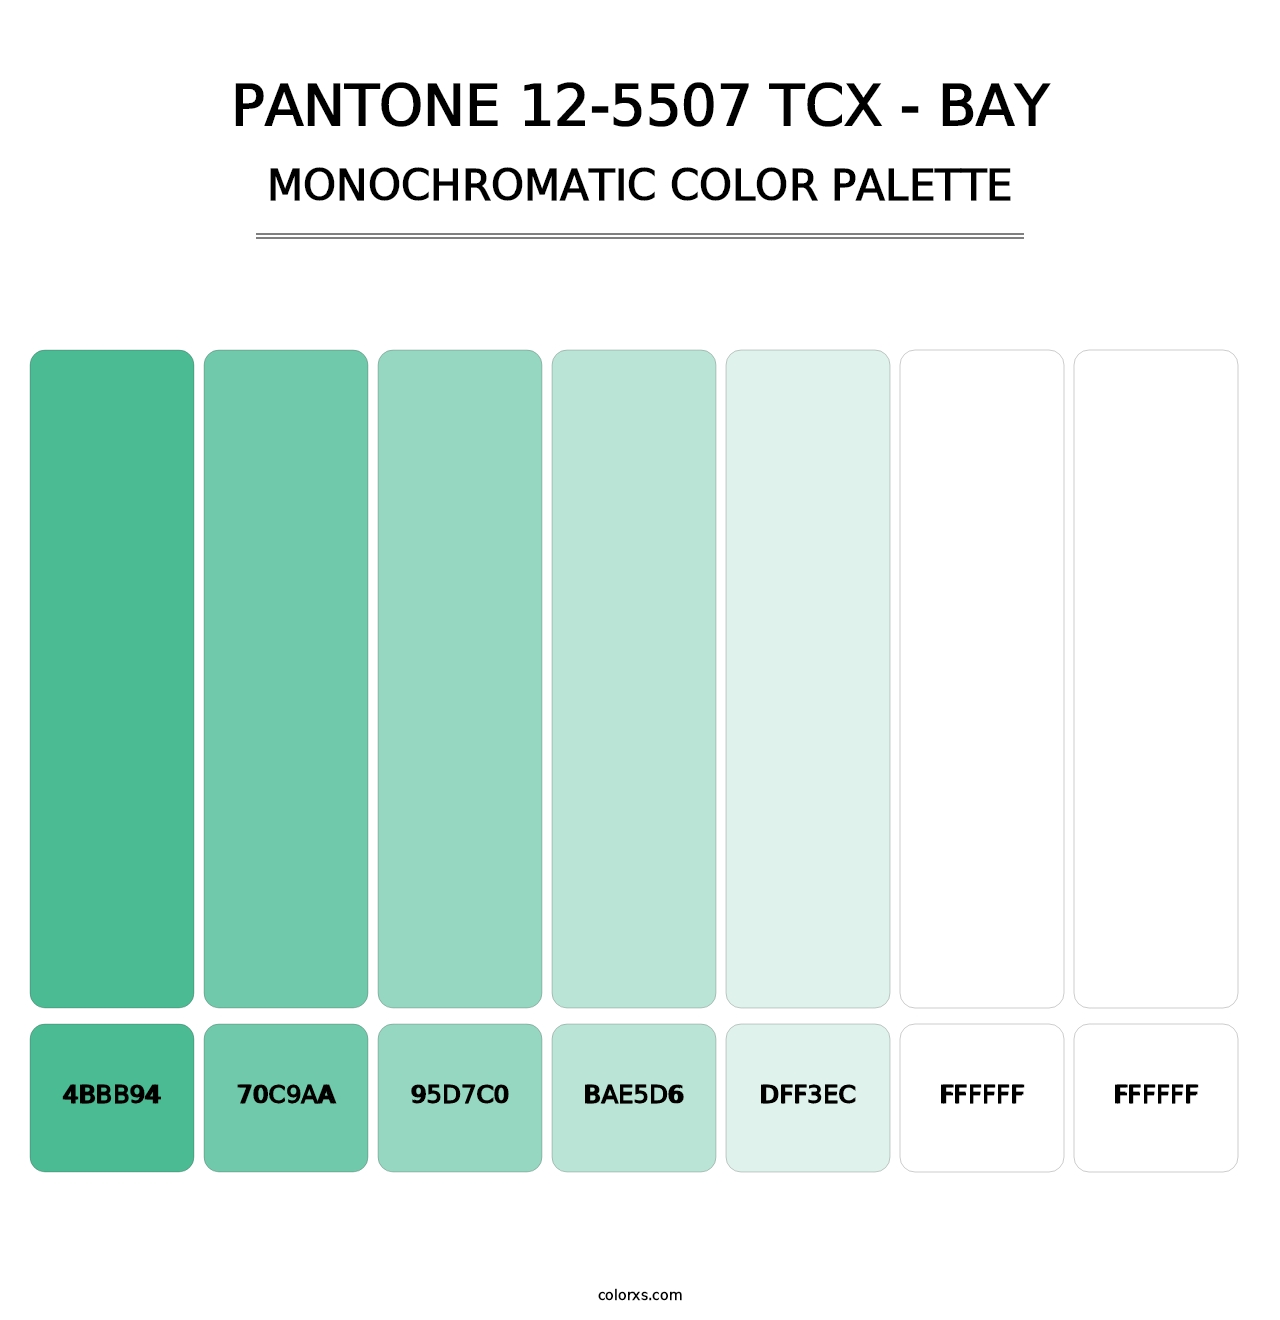 PANTONE 12-5507 TCX - Bay - Monochromatic Color Palette